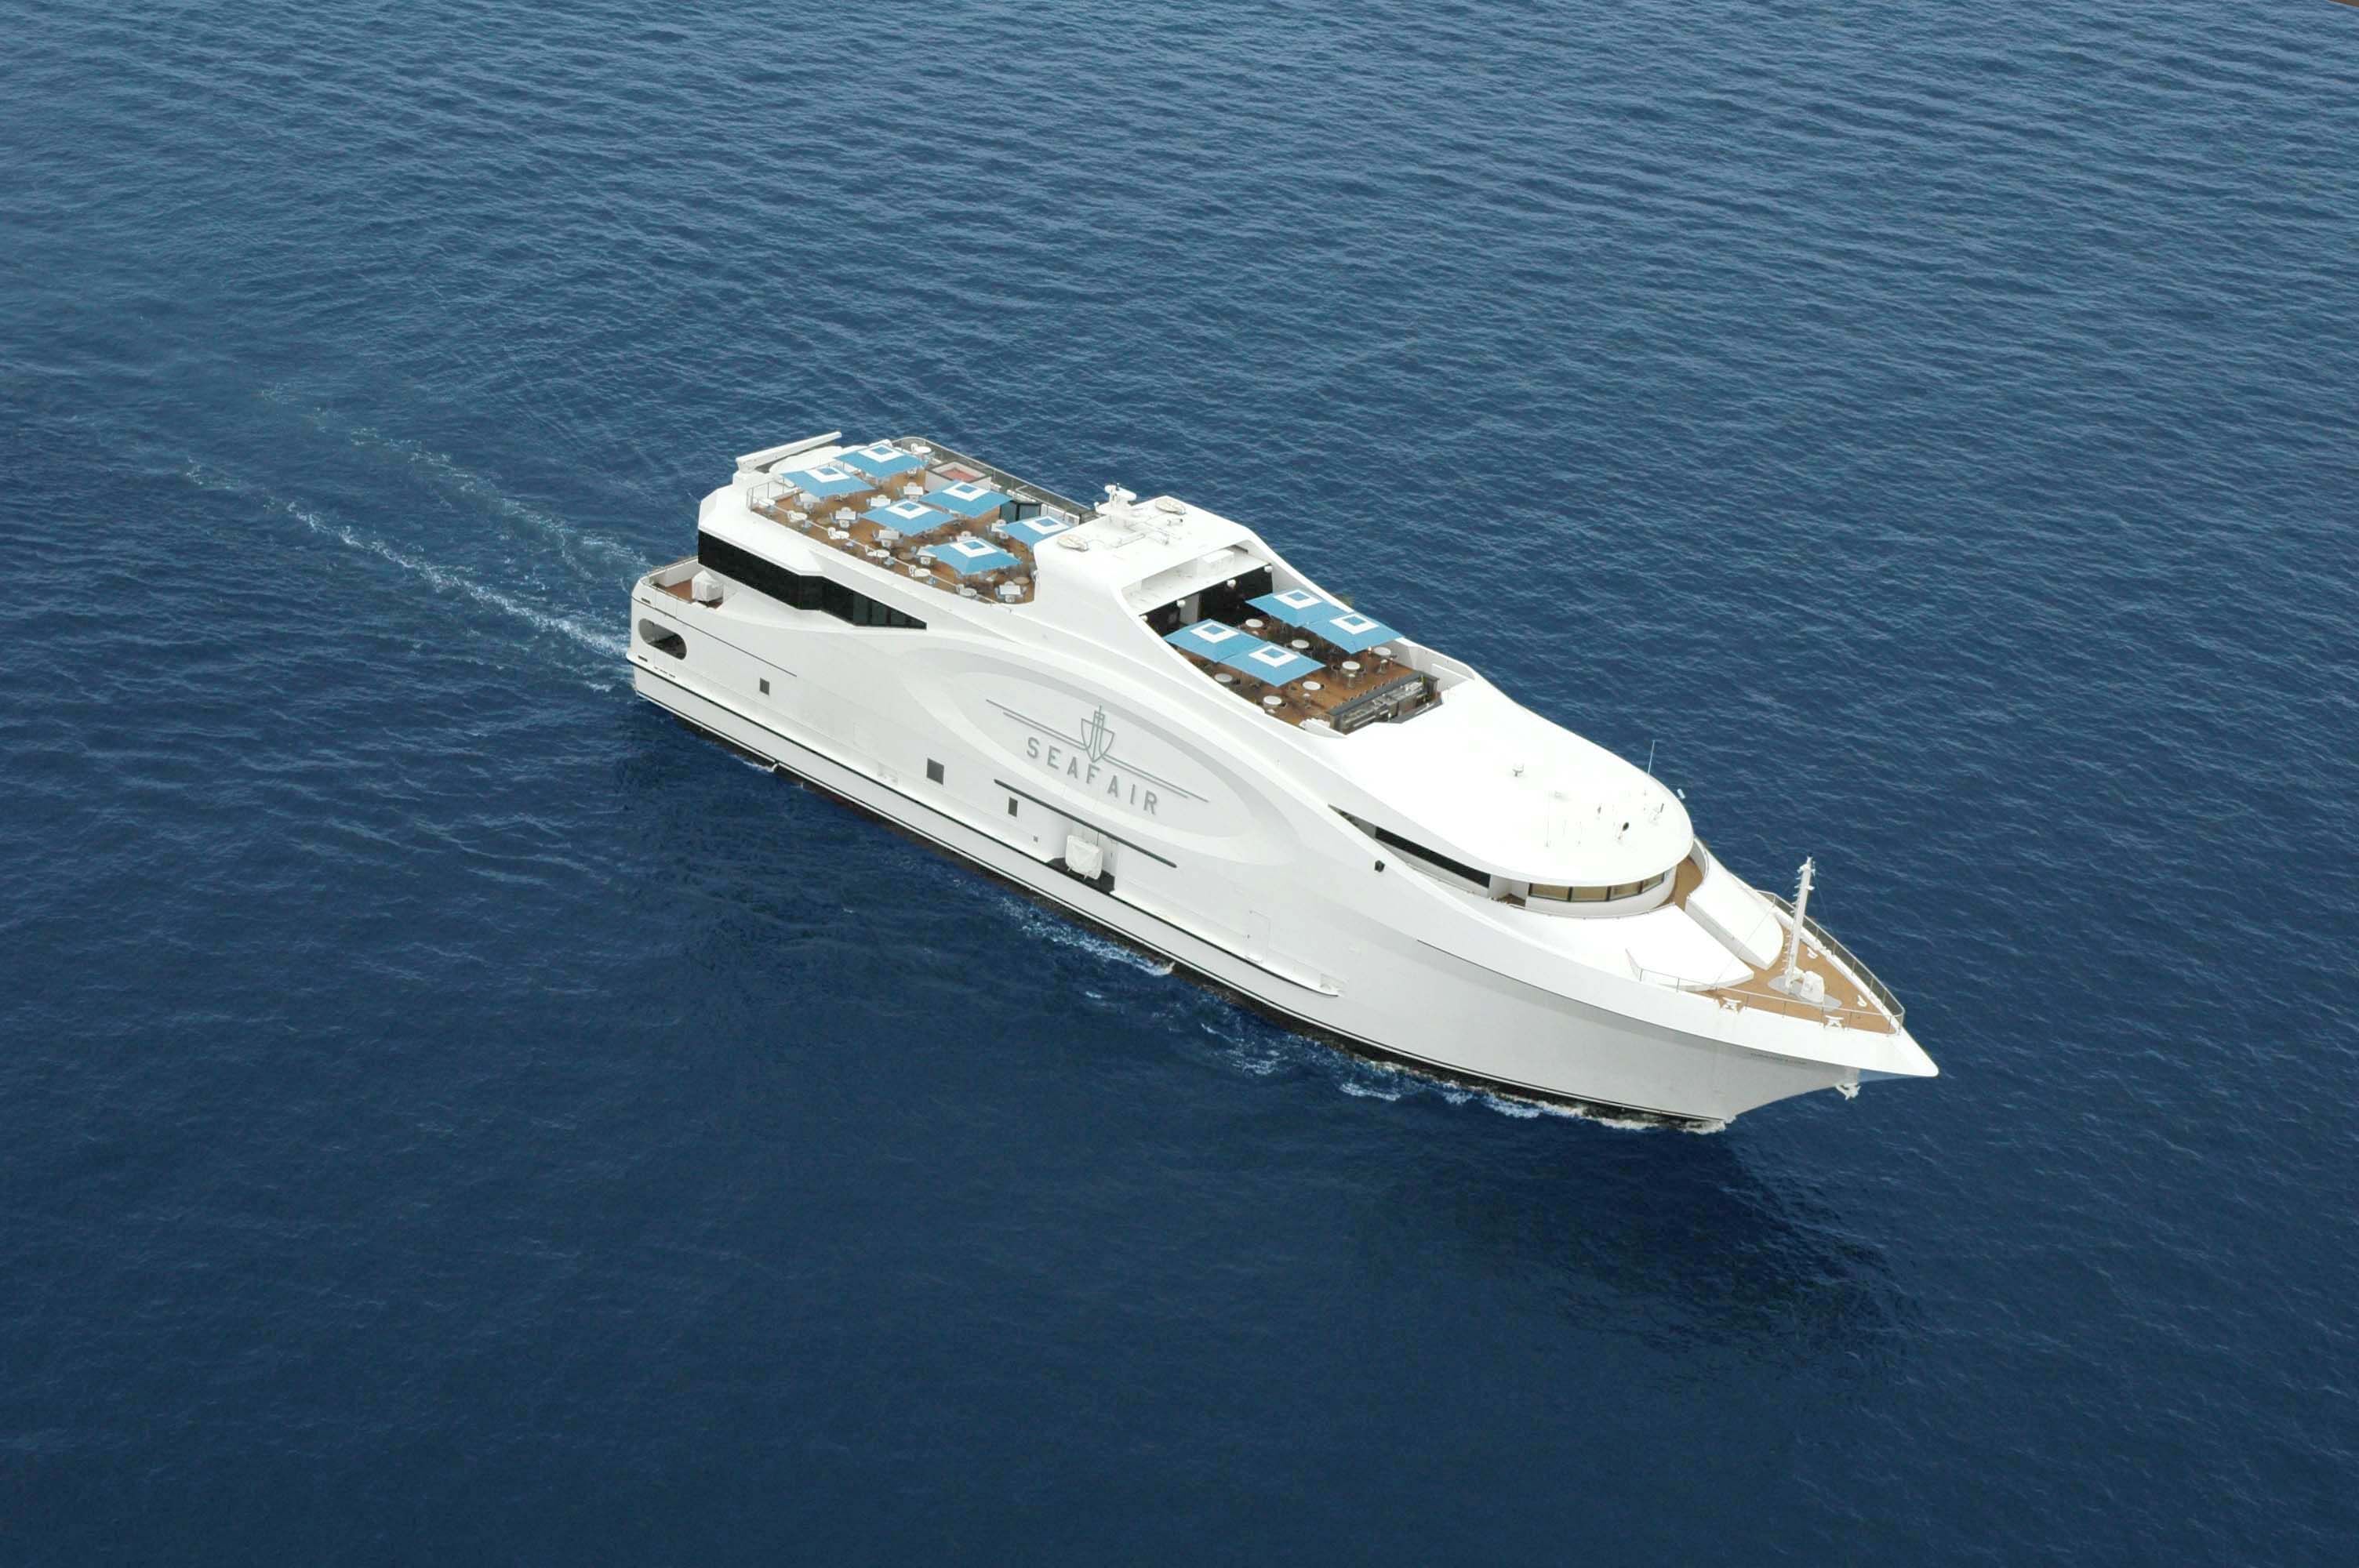 seafair yacht rental price